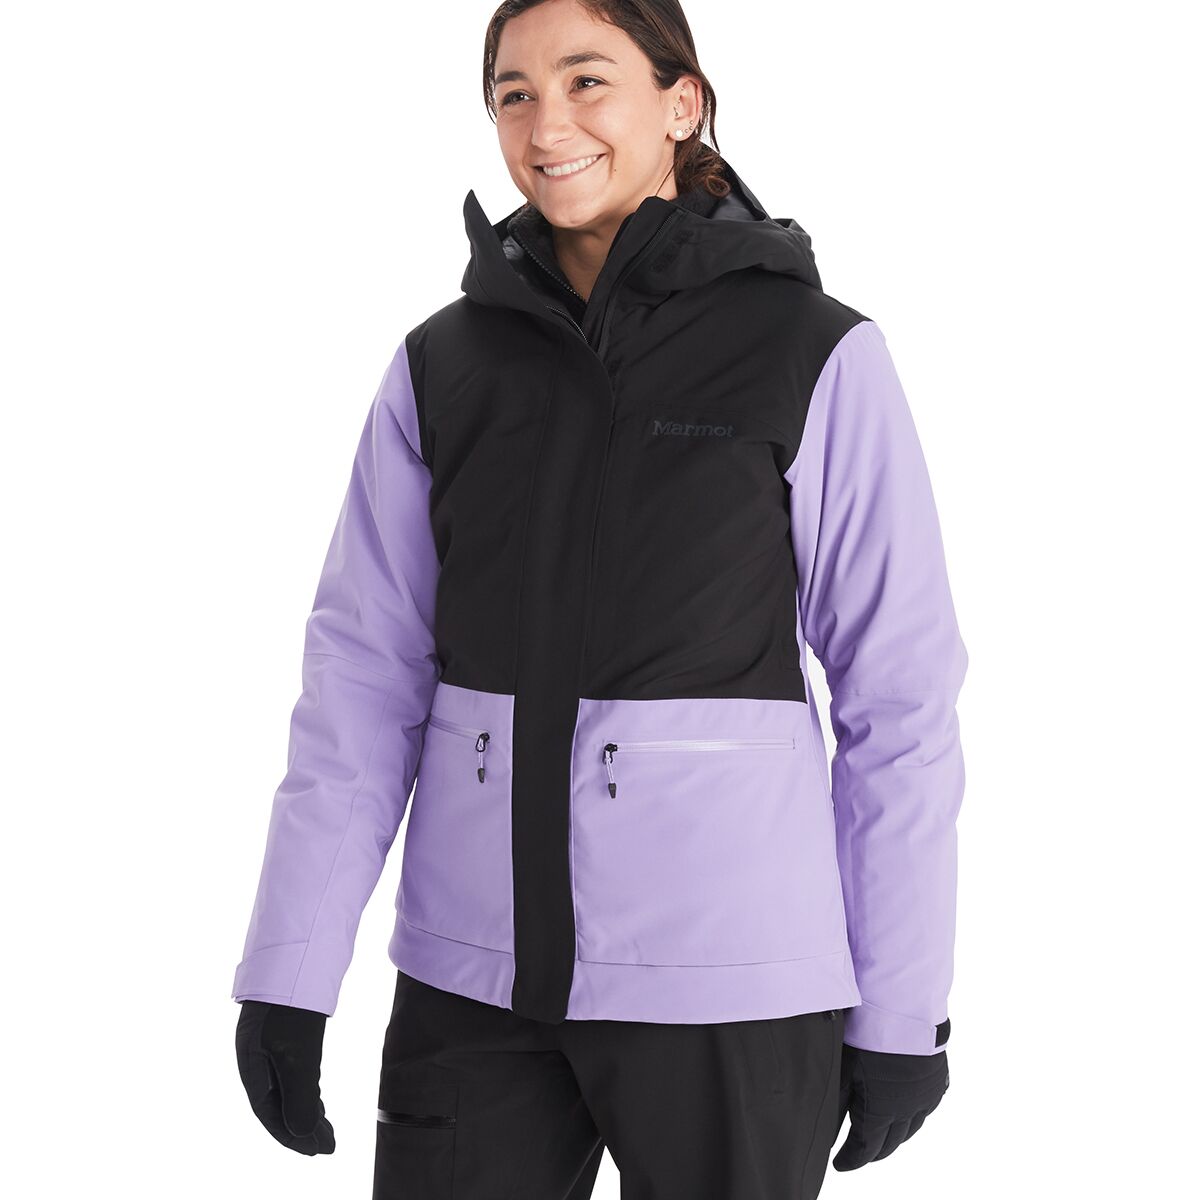 Marmot Refuge Insulated Jacket - Women's